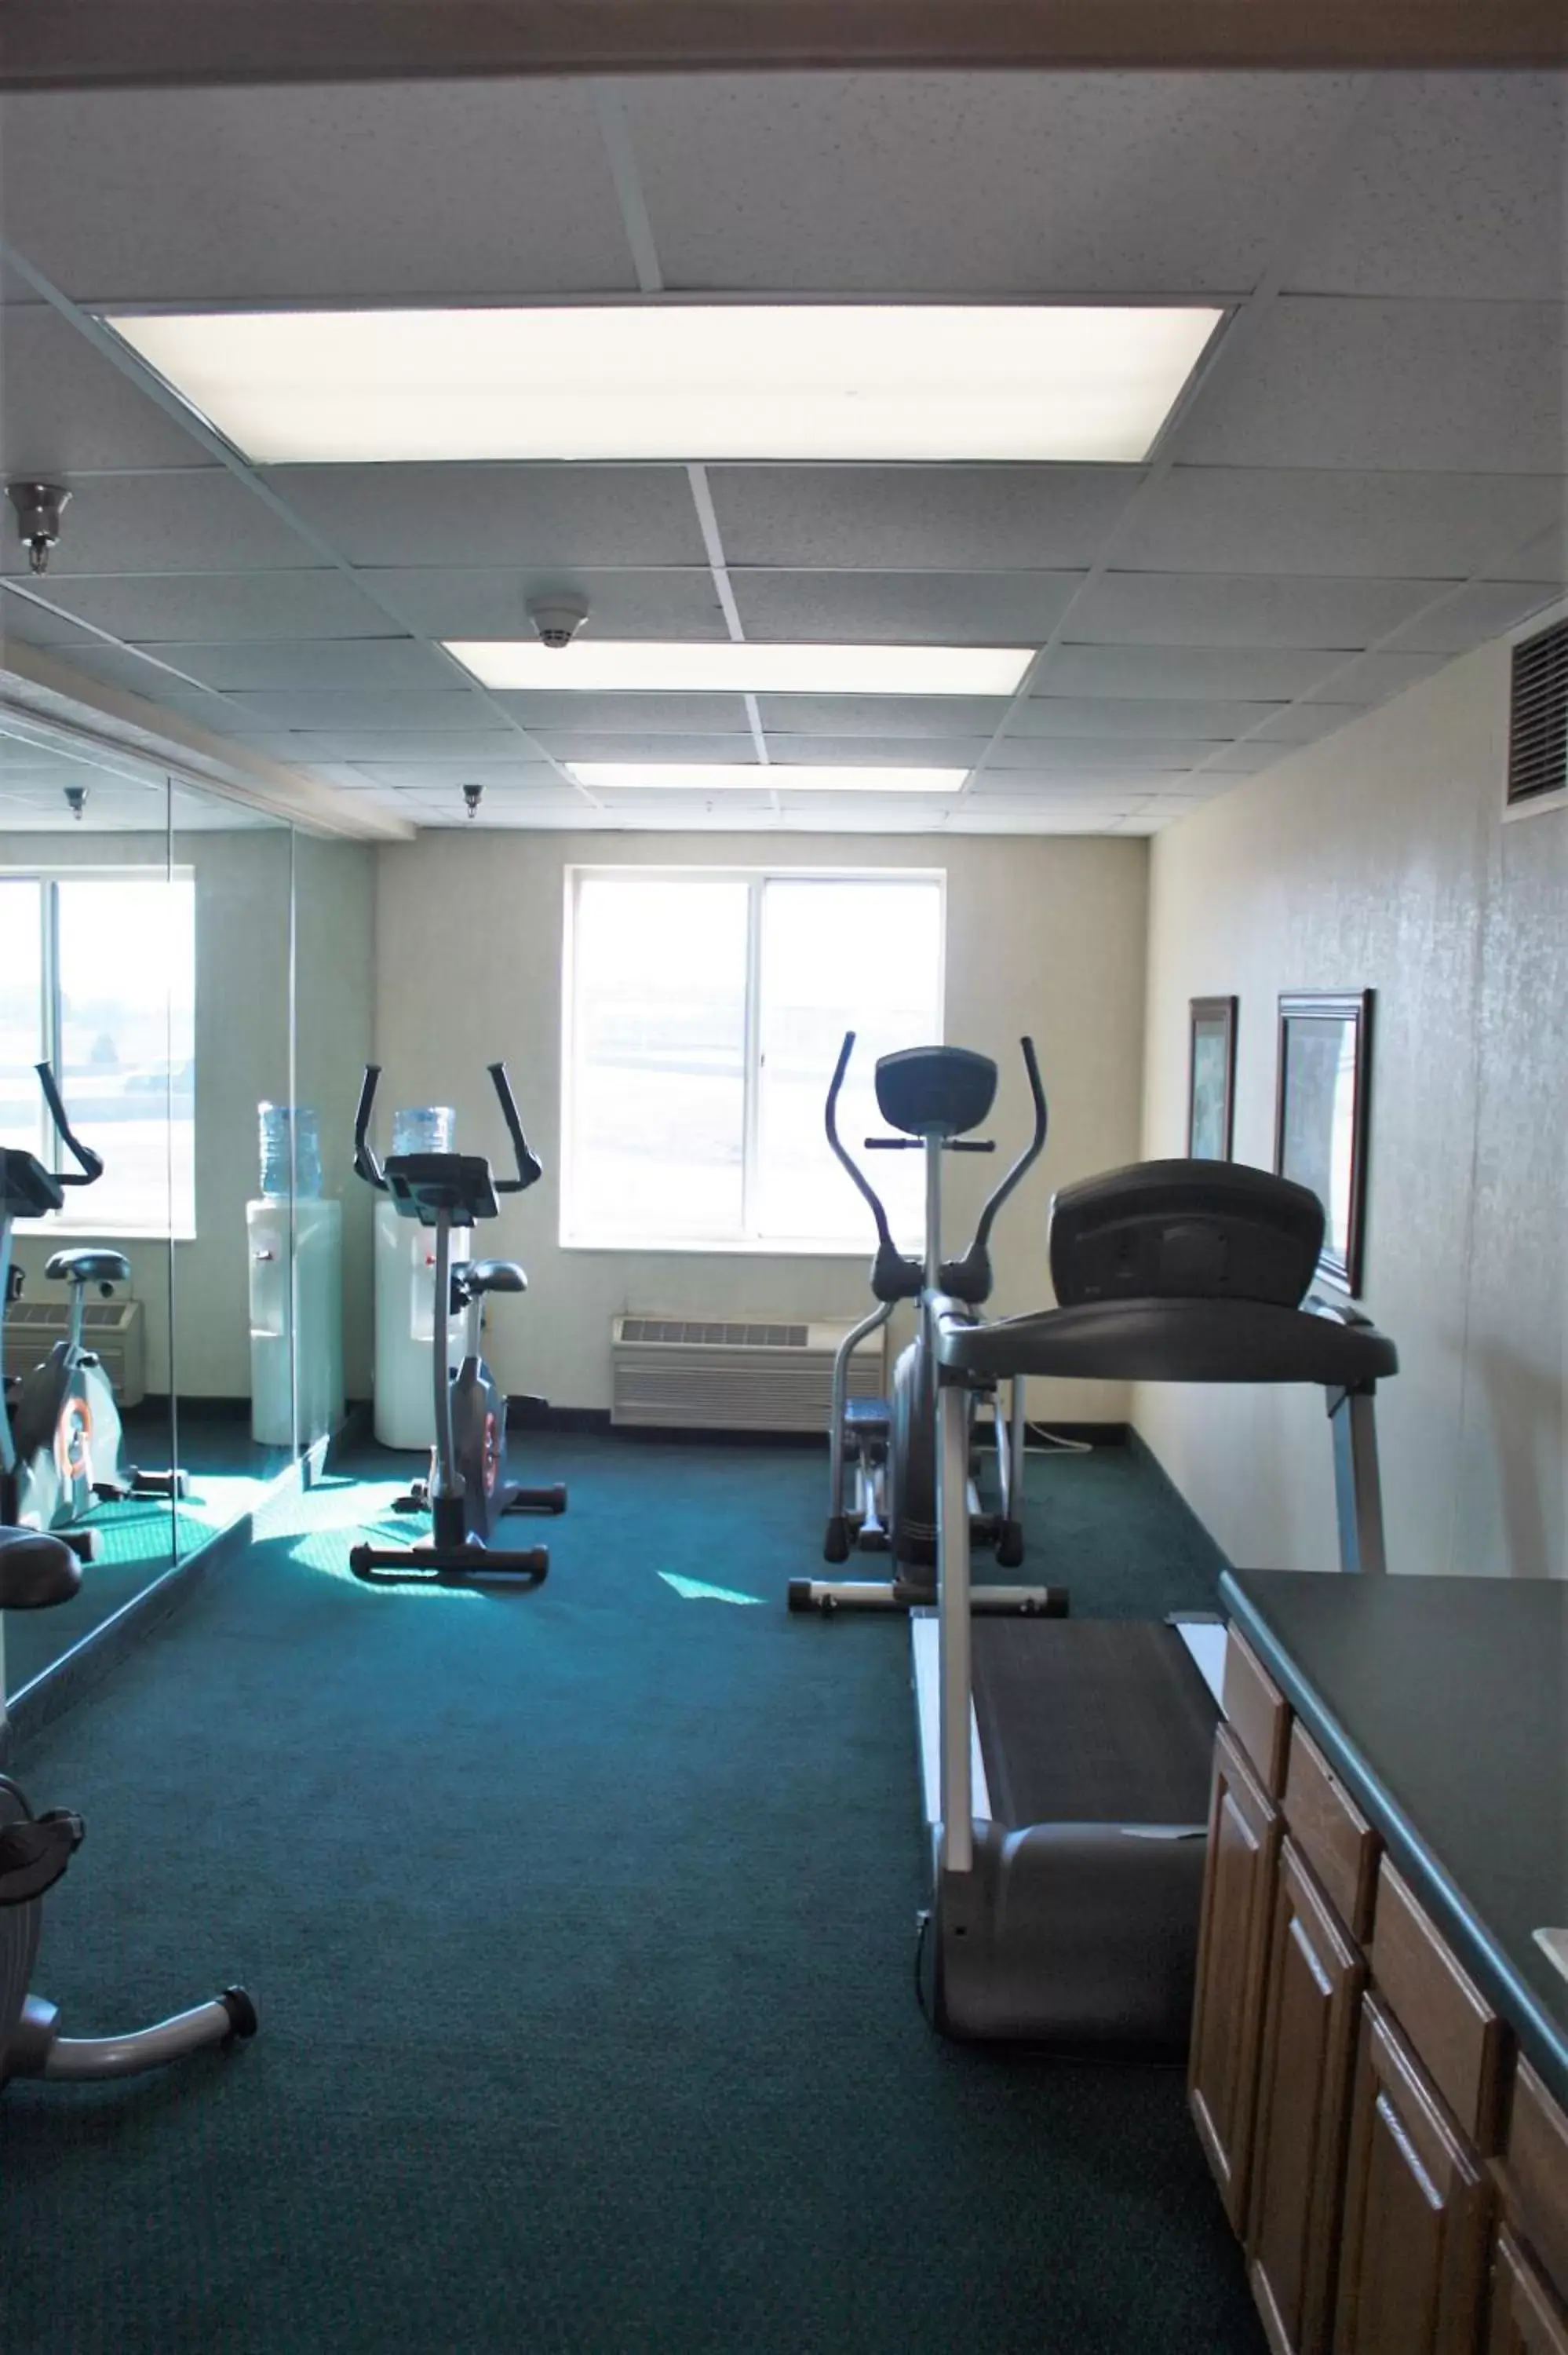 Fitness centre/facilities, Fitness Center/Facilities in Baymont by Wyndham Jonesboro